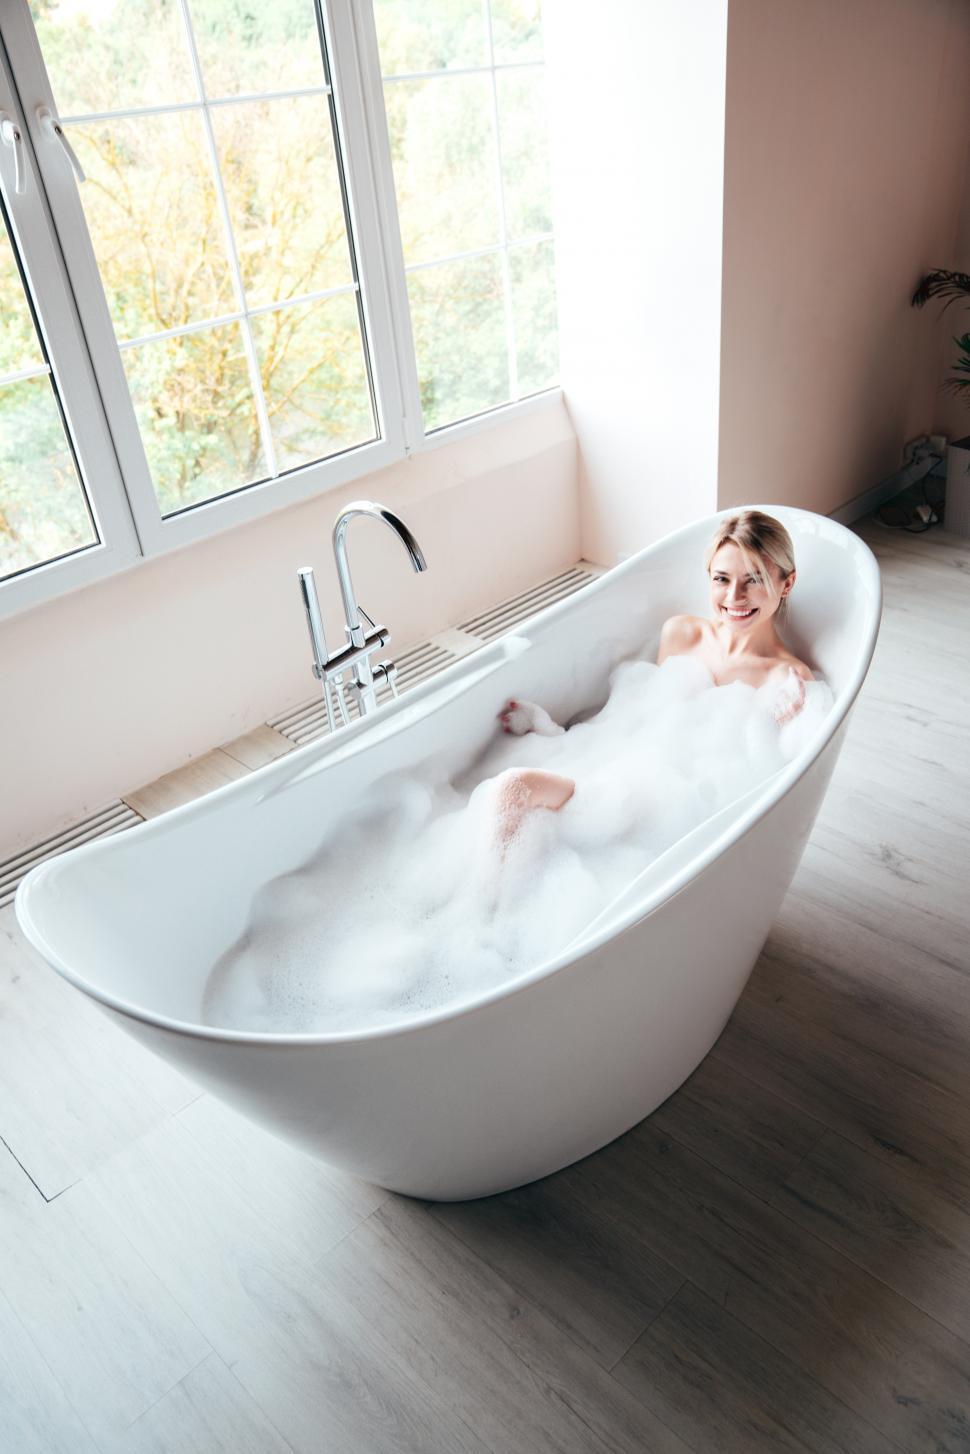 Free Image of A woman in a bathtub 